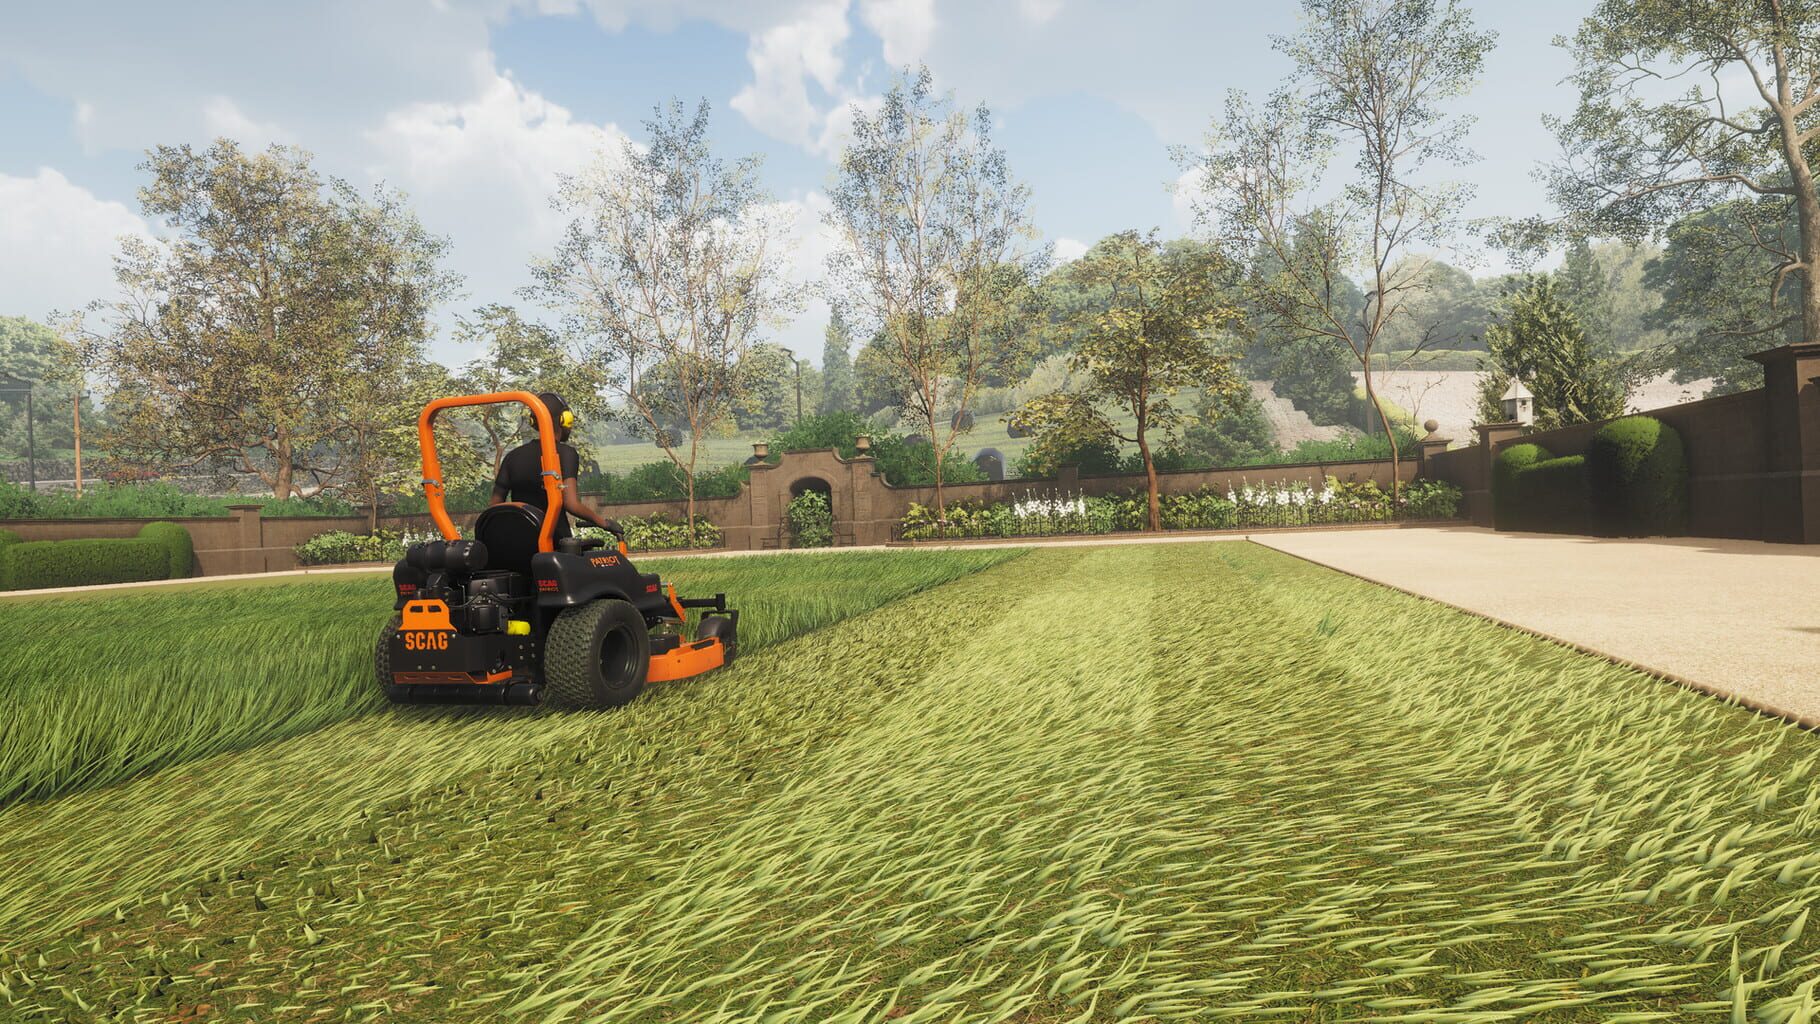 Lawn Mowing Simulator screenshots